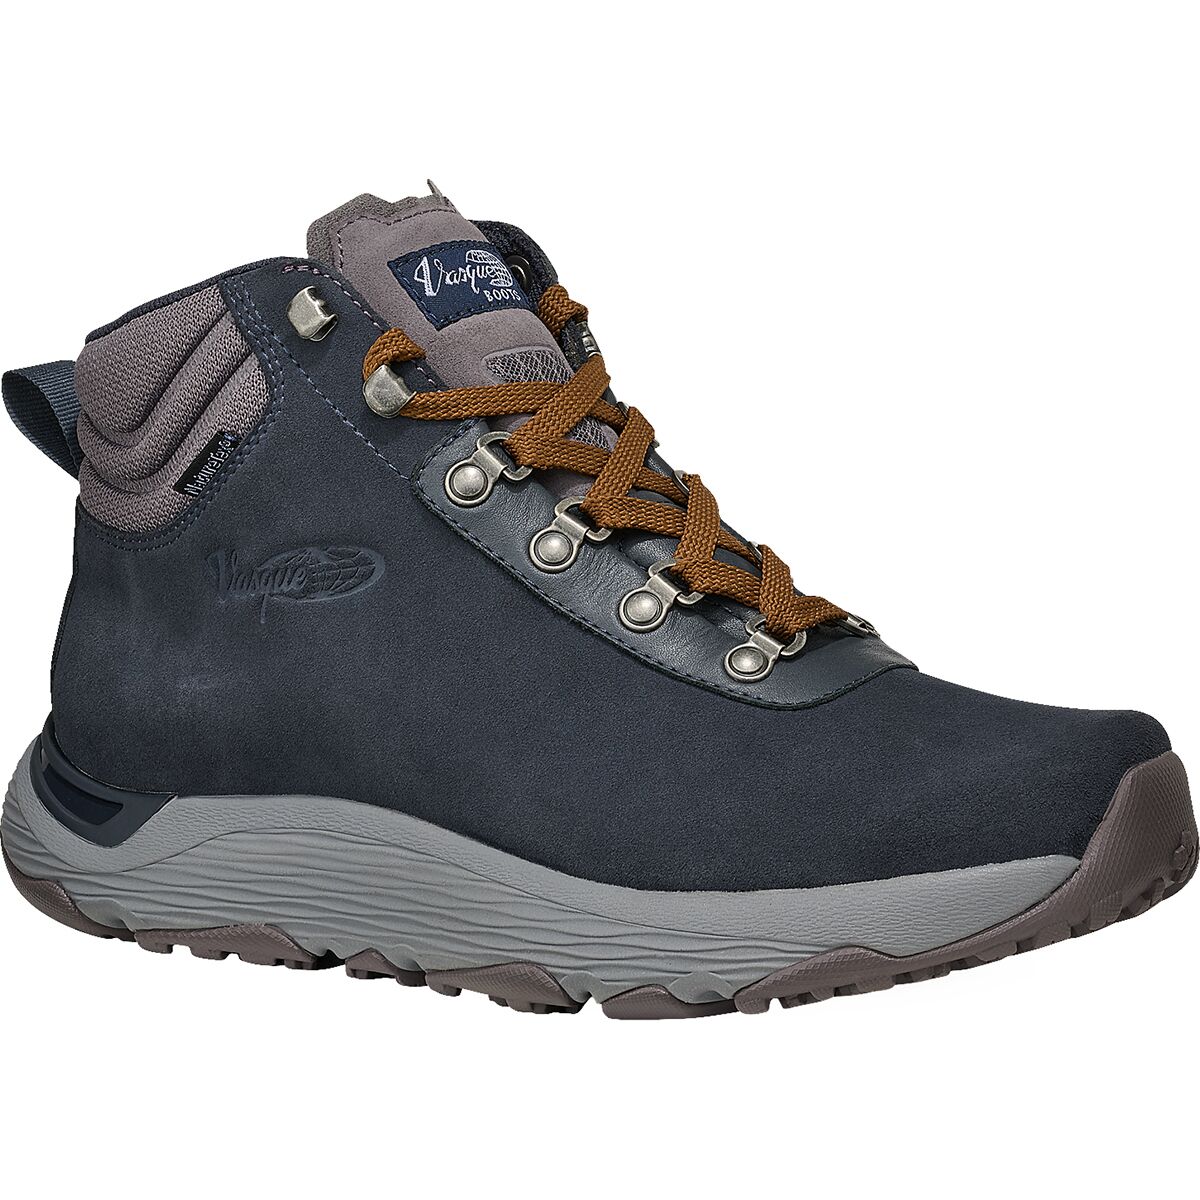 Vasque Sunsetter Hiking Boot - Men's - Footwear